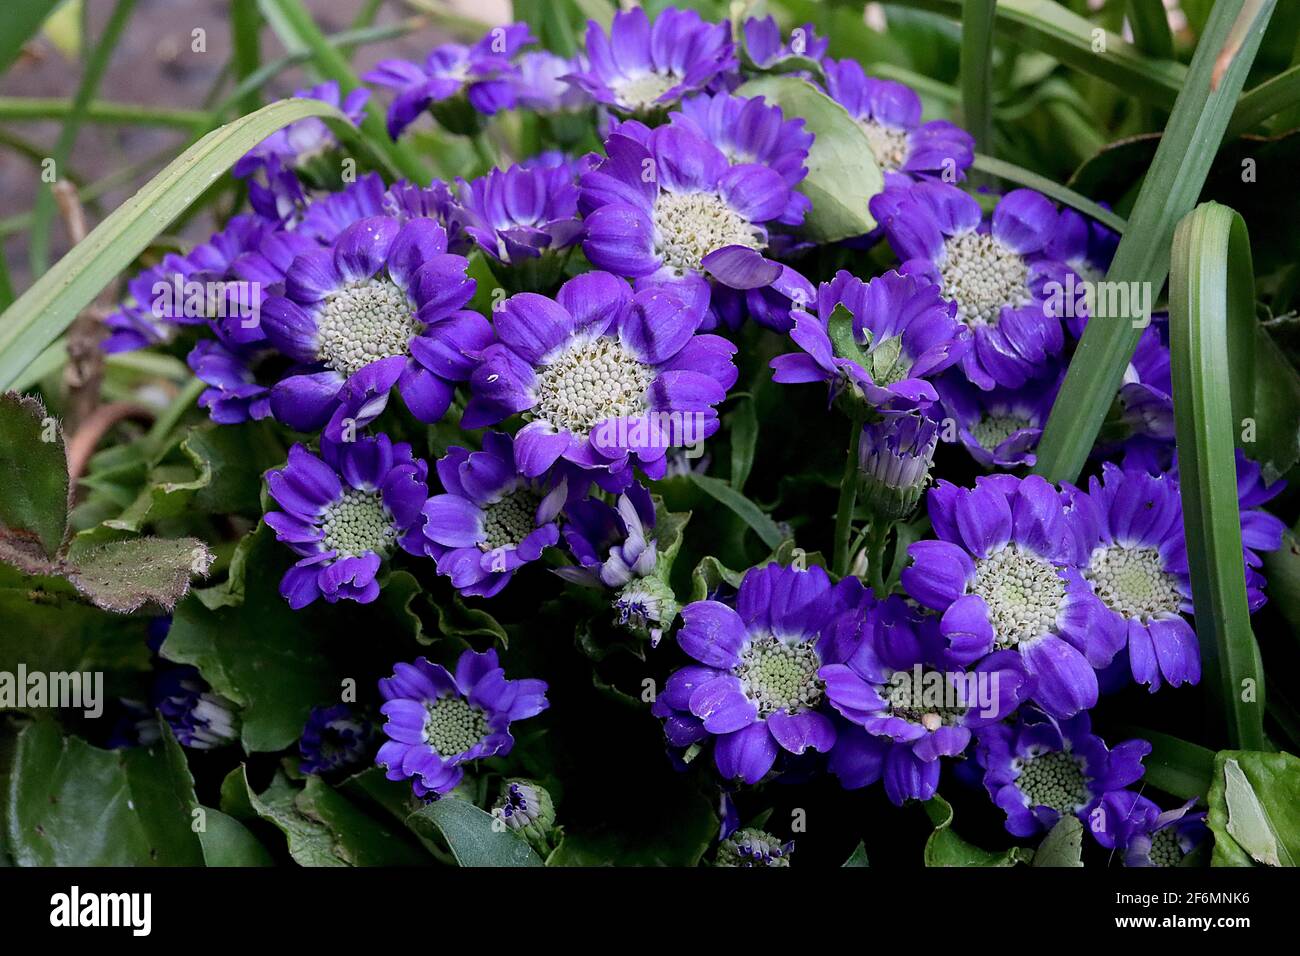 Cineraria Senecio cruentus hybrid Pericallis Hybrid, Florist’s Cineraria, deep purple short petalled daisy-like flowers with reflexed petals,  April, Stock Photo